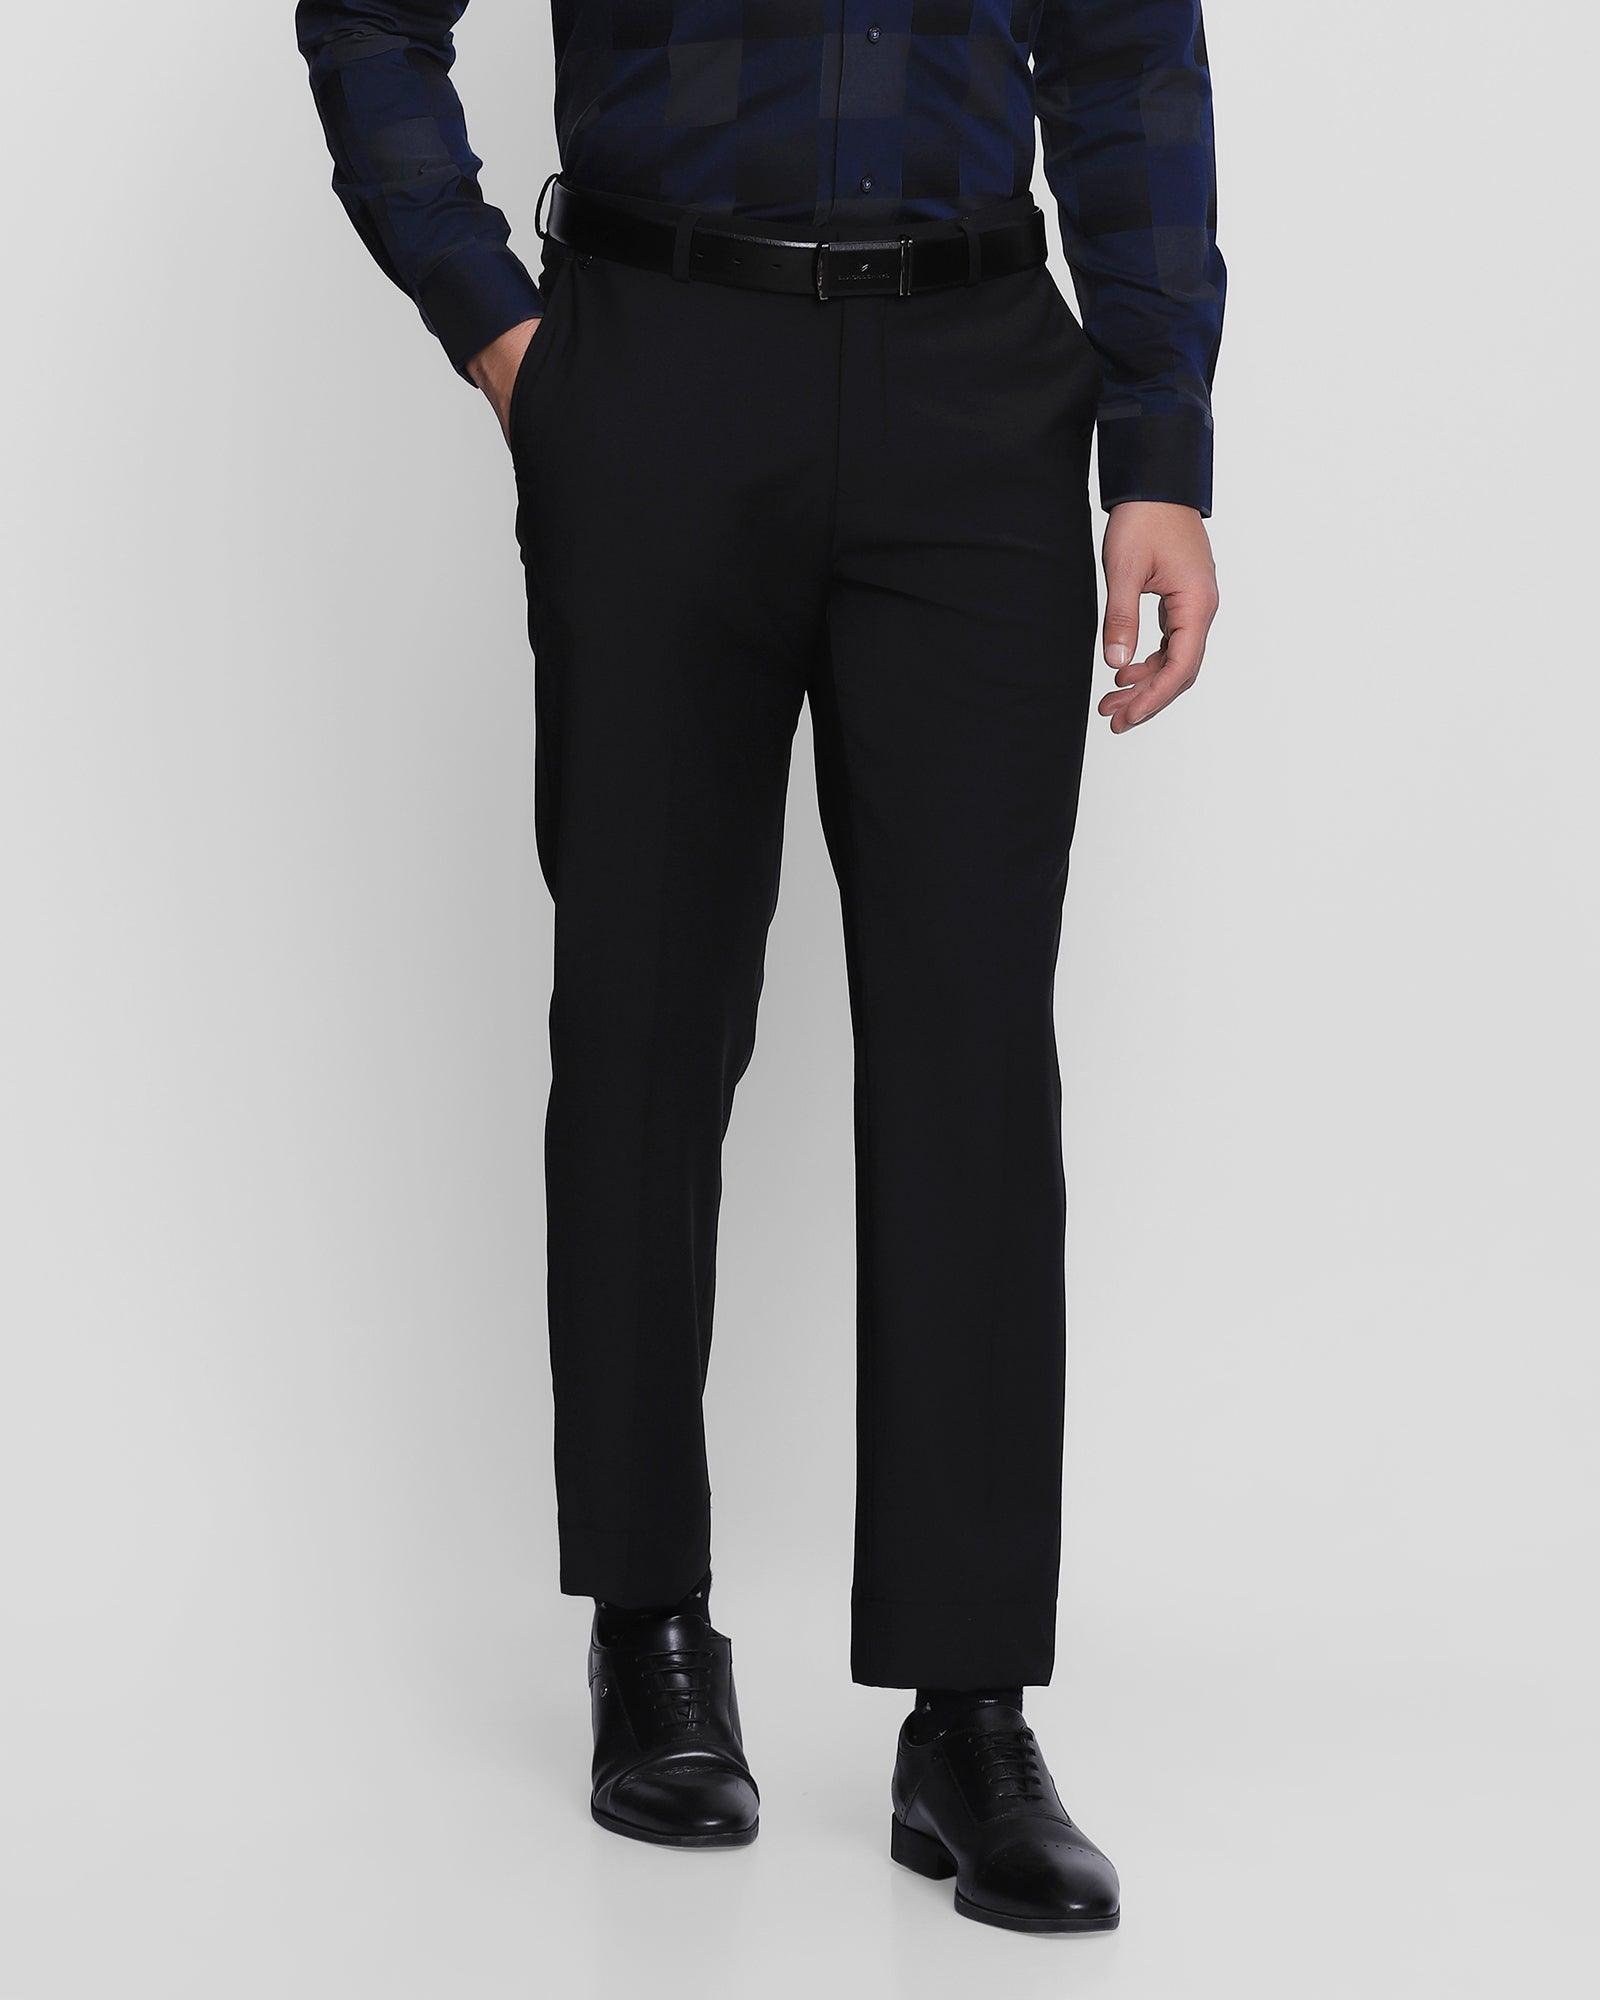 Slim Fit B-91 Formal Black Textured Trouser - Serret